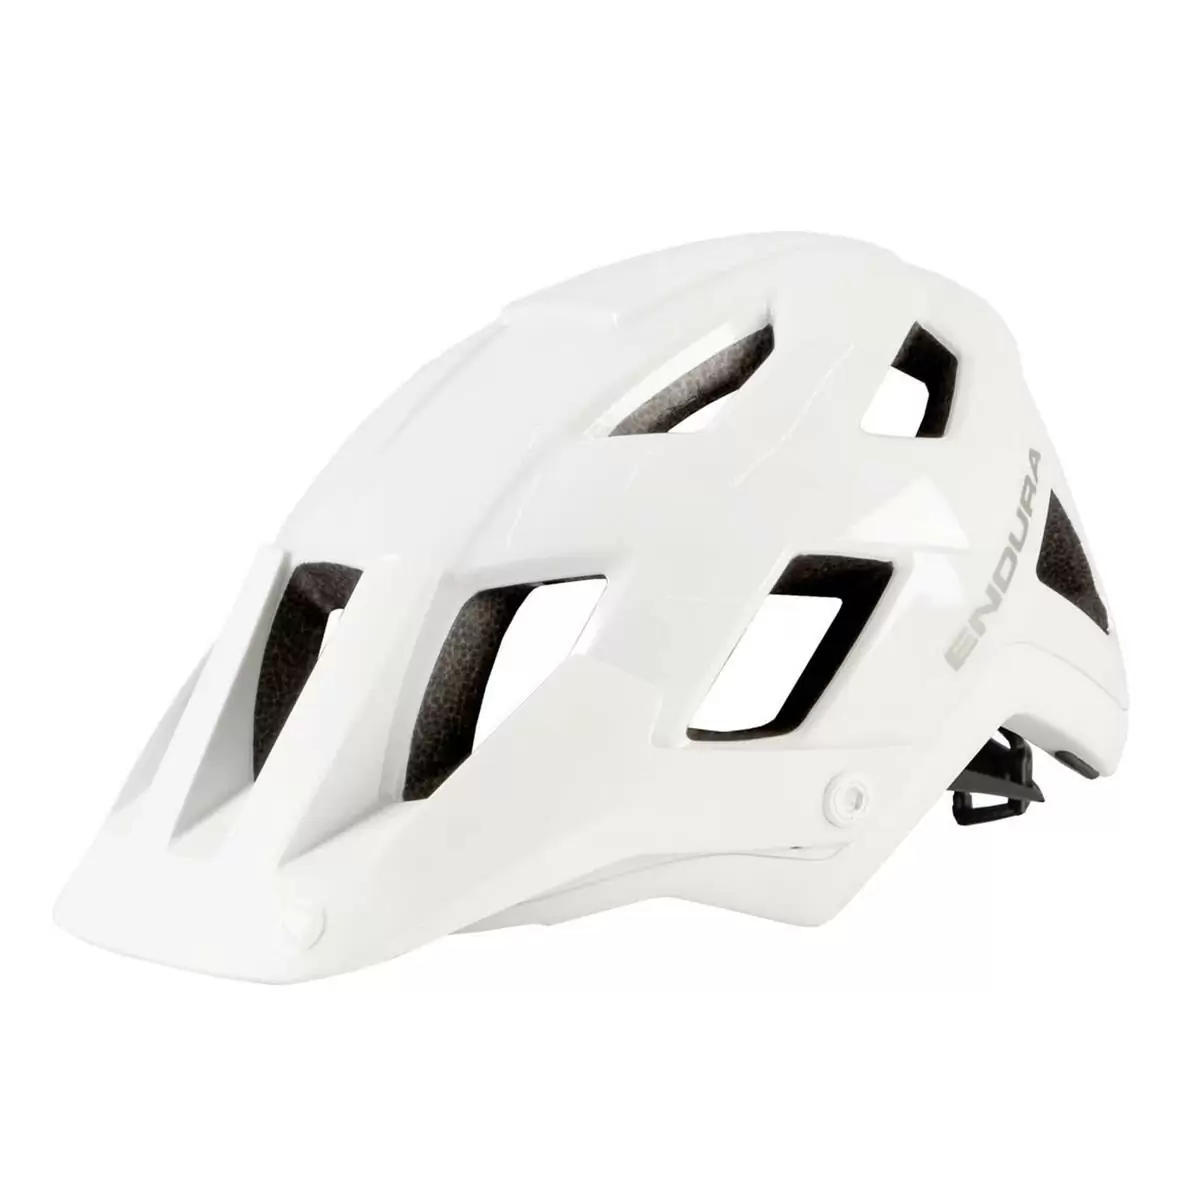 Hummvee Plus MTB Enduro Helmet White Size M/L (55-59cm) - image